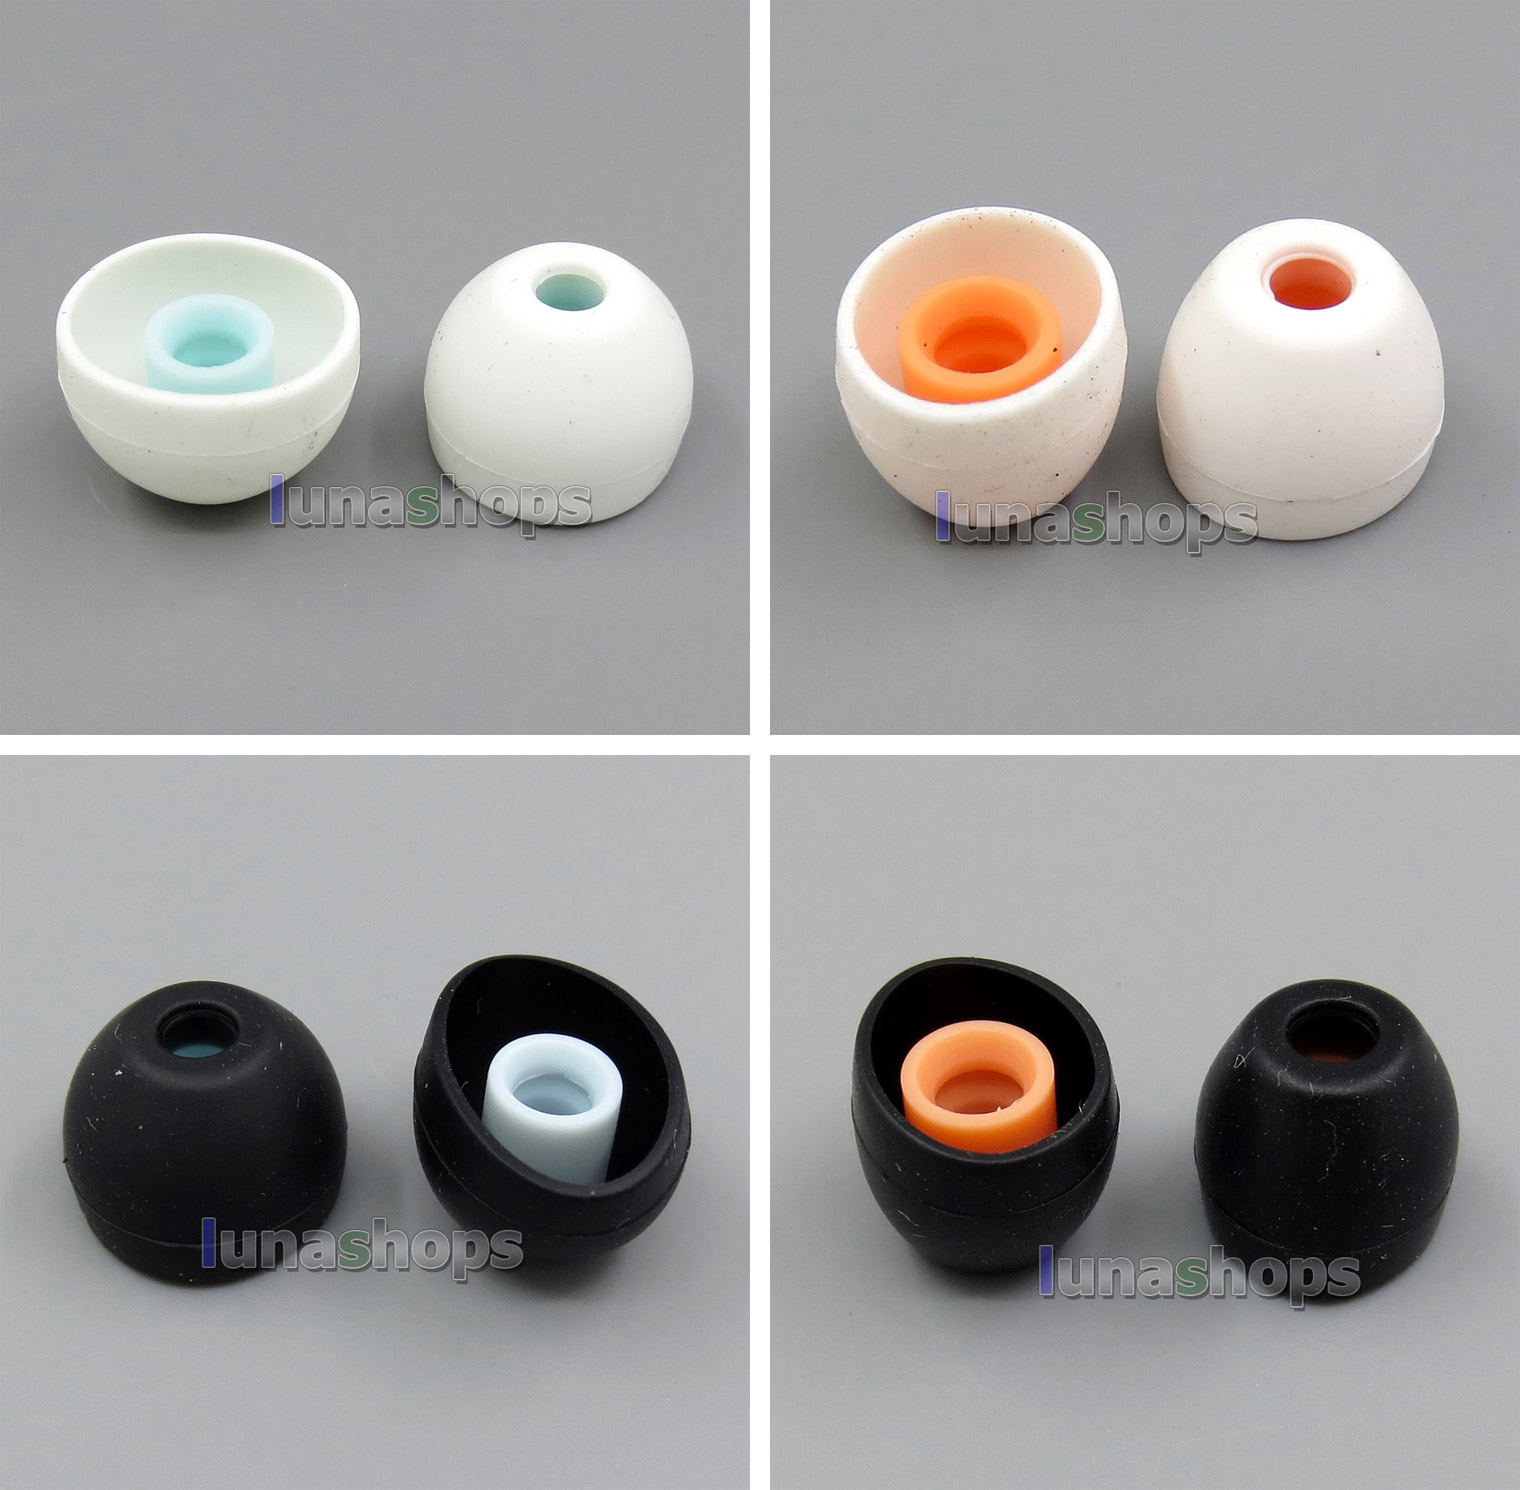 2 Pair Bulk Earphone Double Color Tips With Plastic Tube For Sony MDR-nc020 JVC Sennheiser etc.